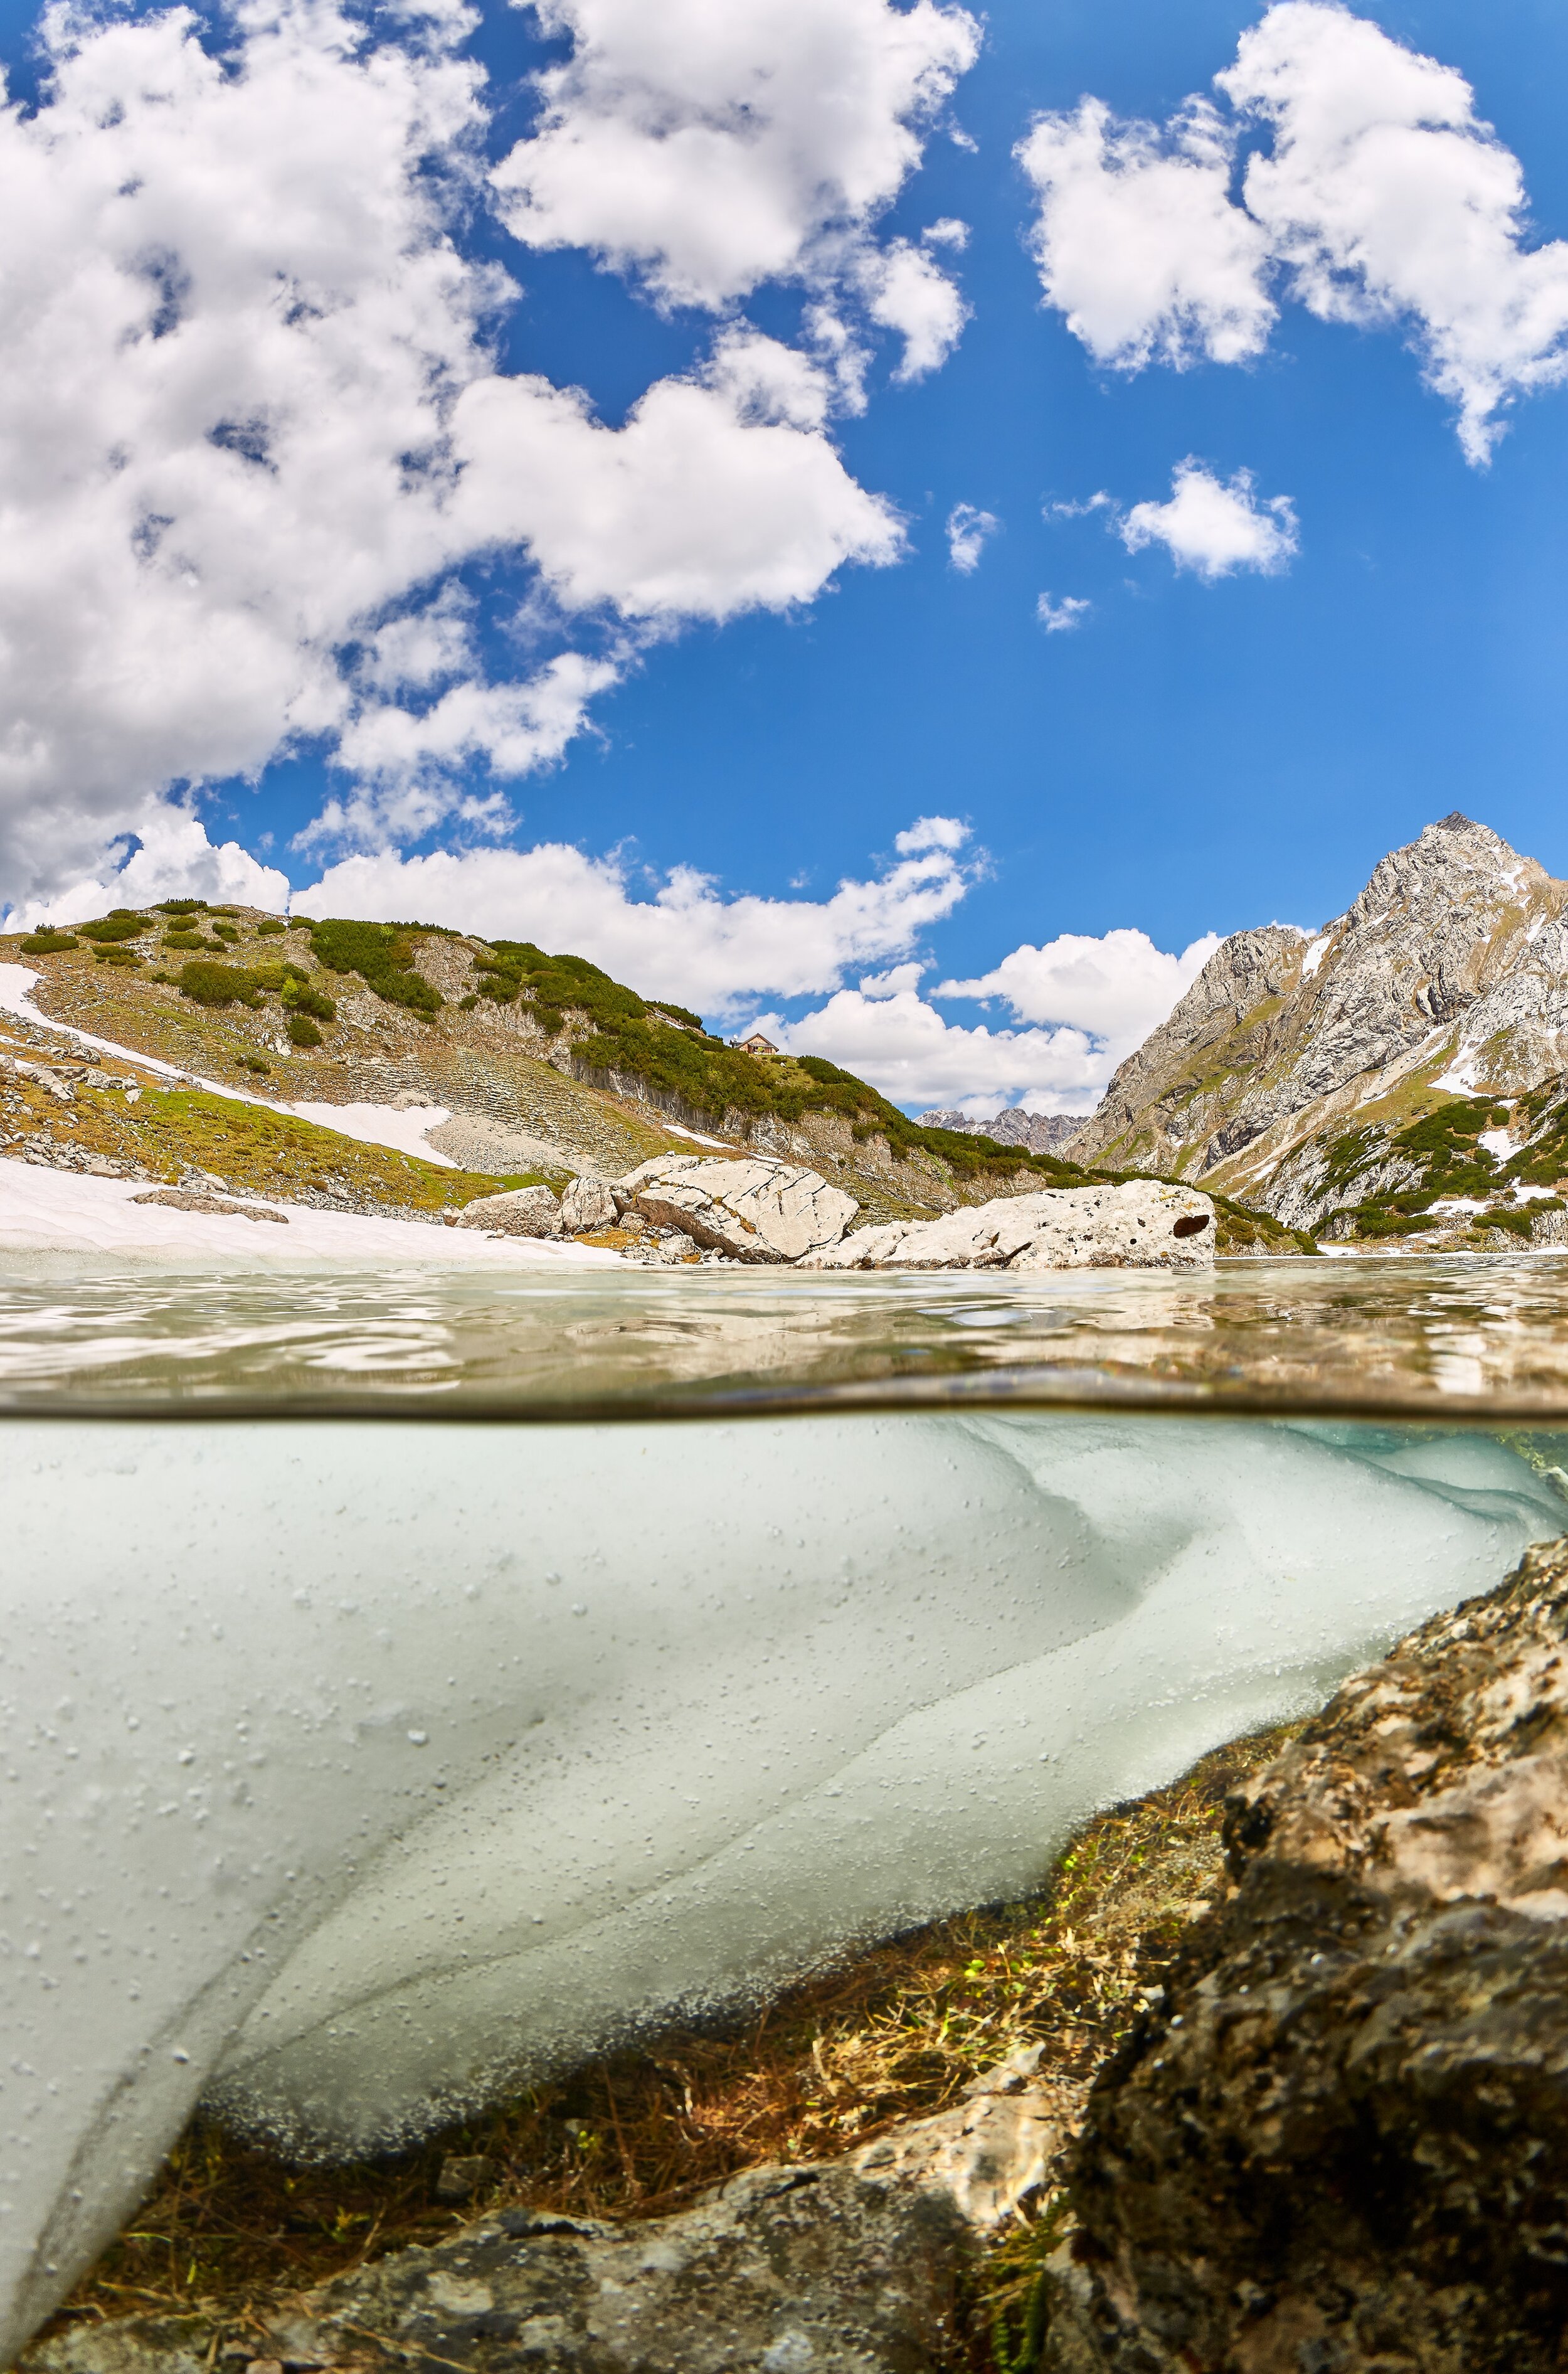 Drachensee in Tyrol, Austria